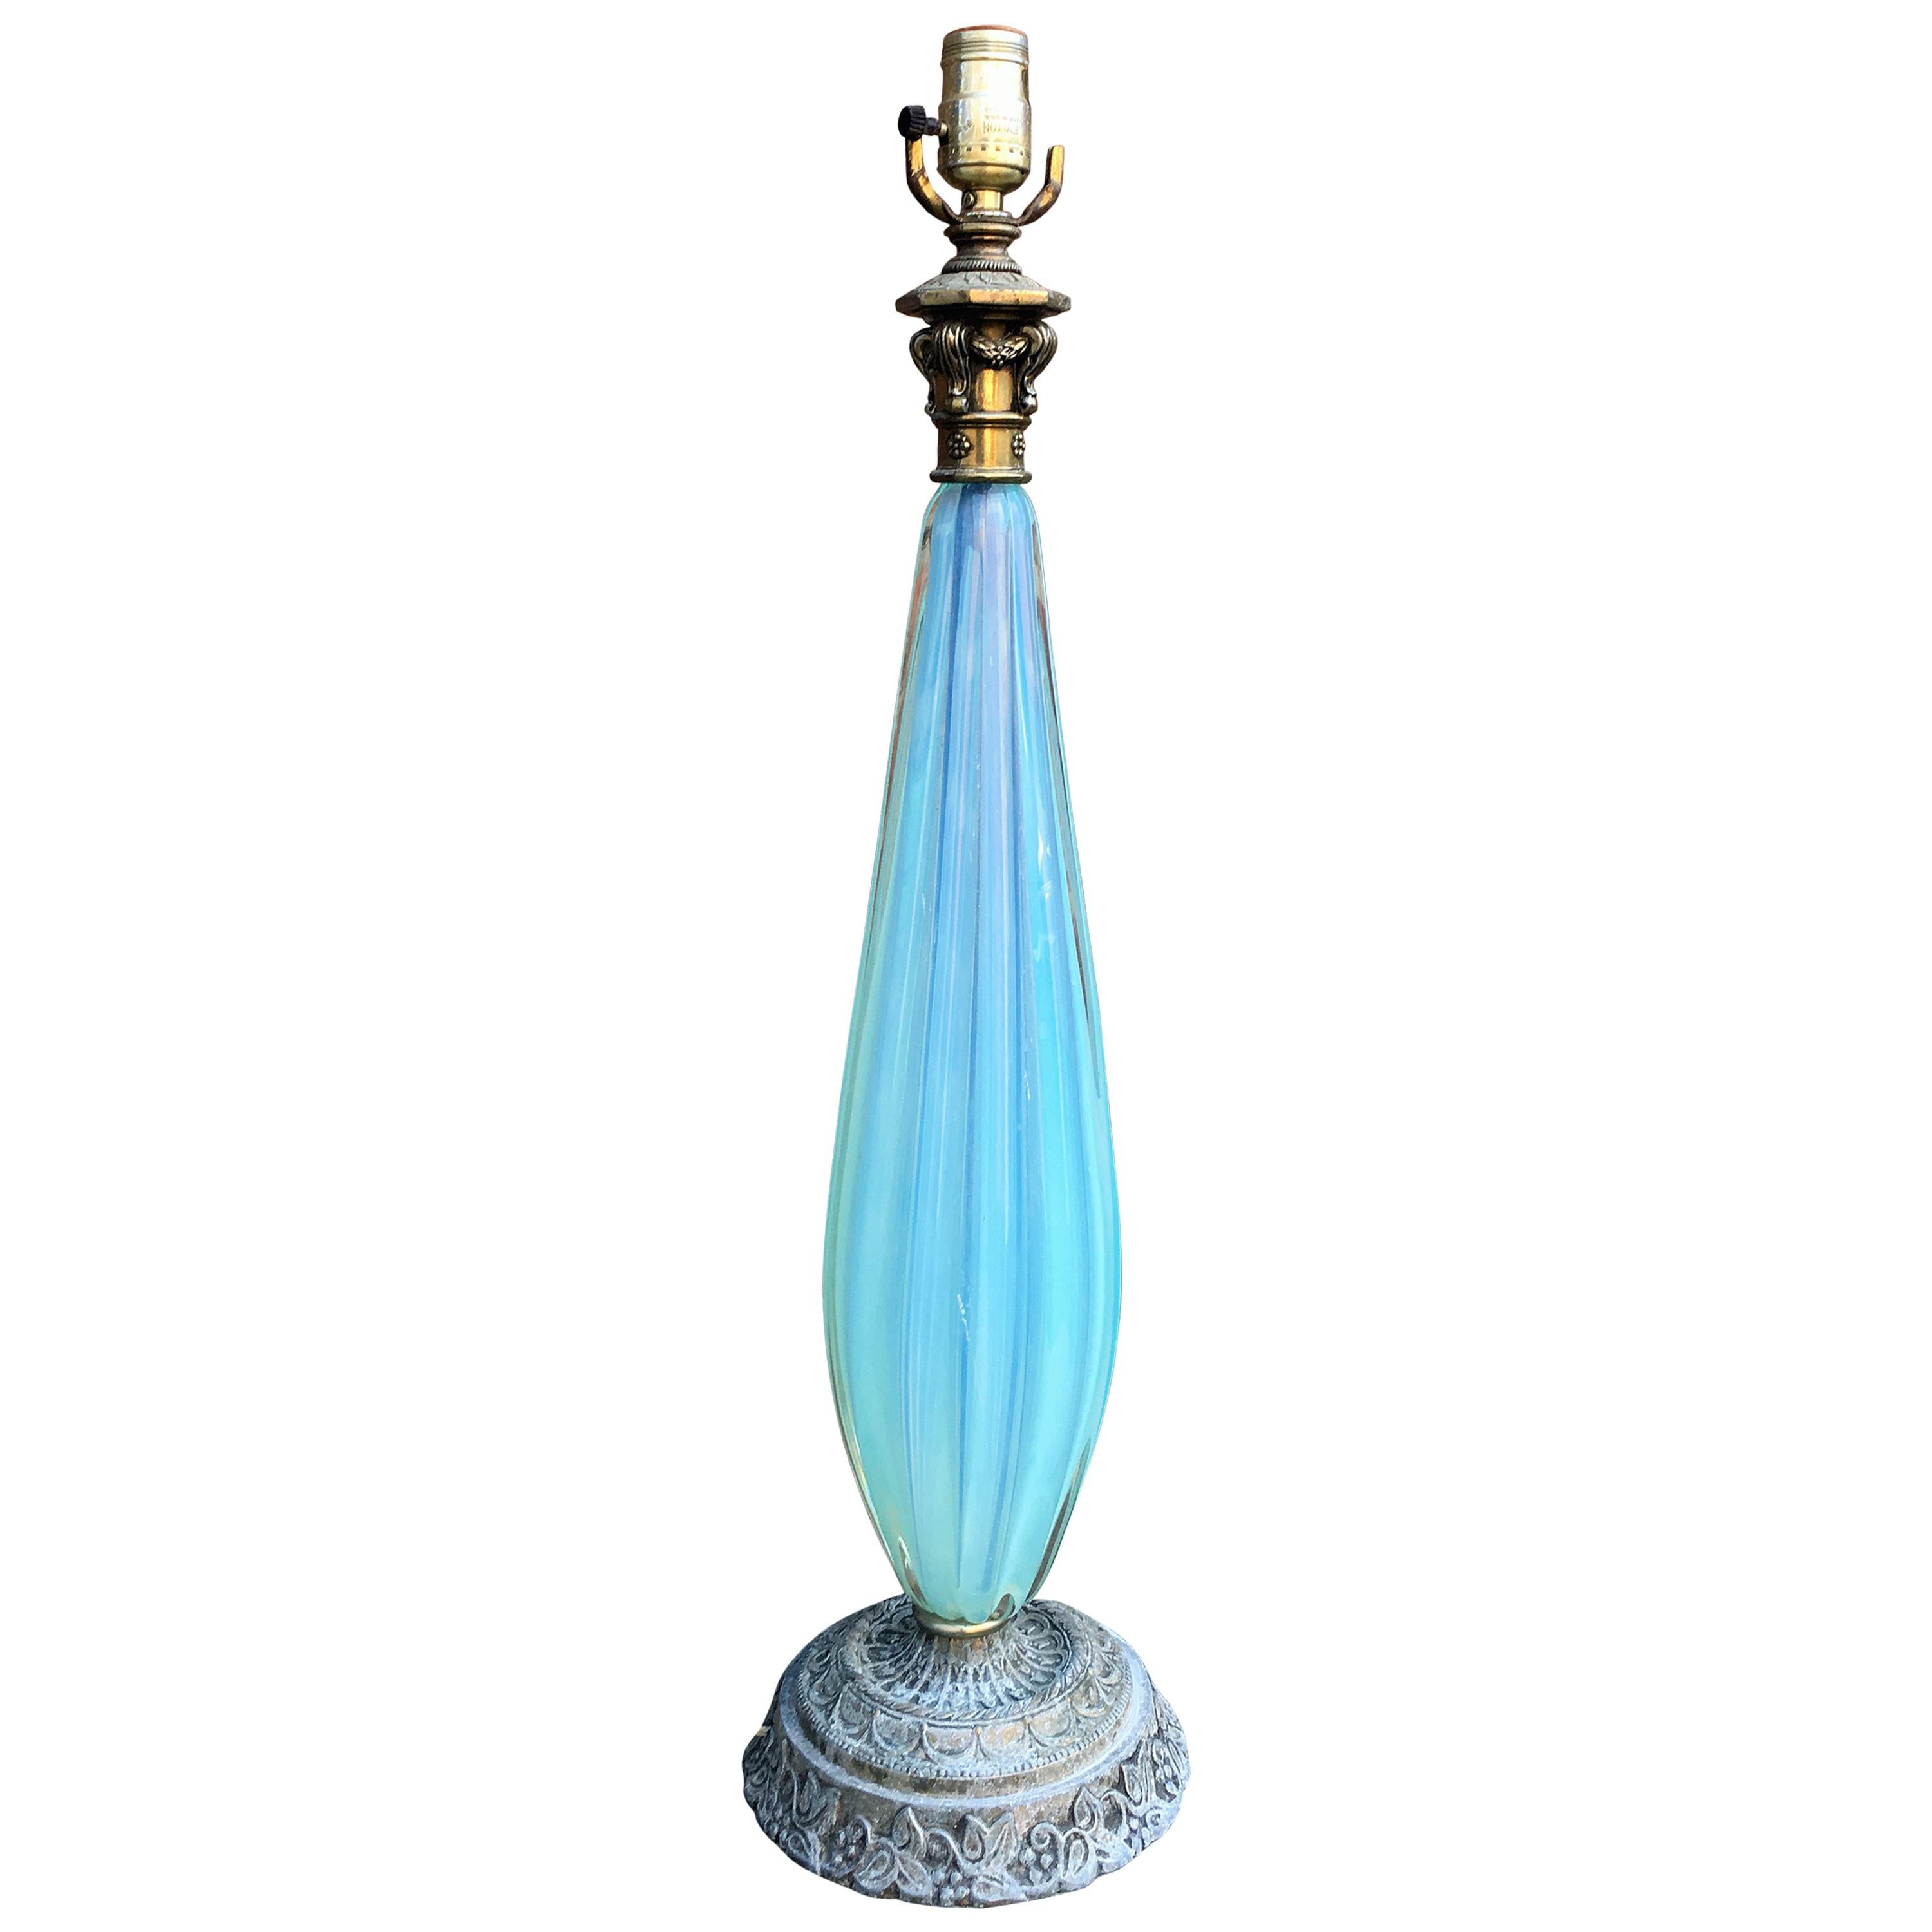 Lampe en verre de Murano et métal patiné, vers 1950-1960 en vente